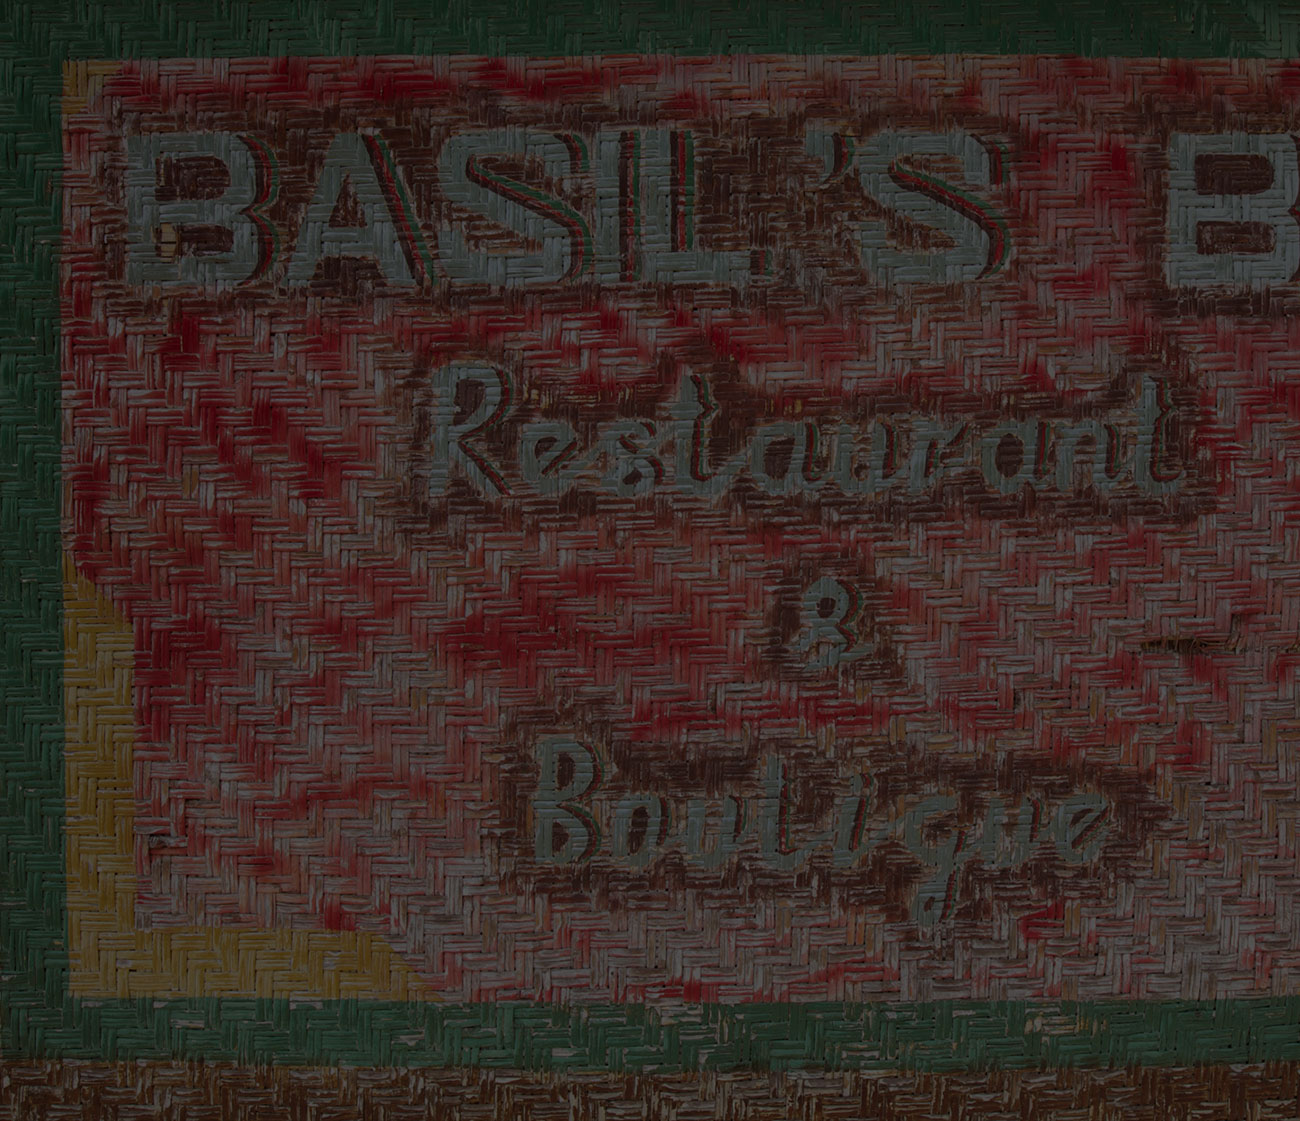 (c) Basilsbar.com